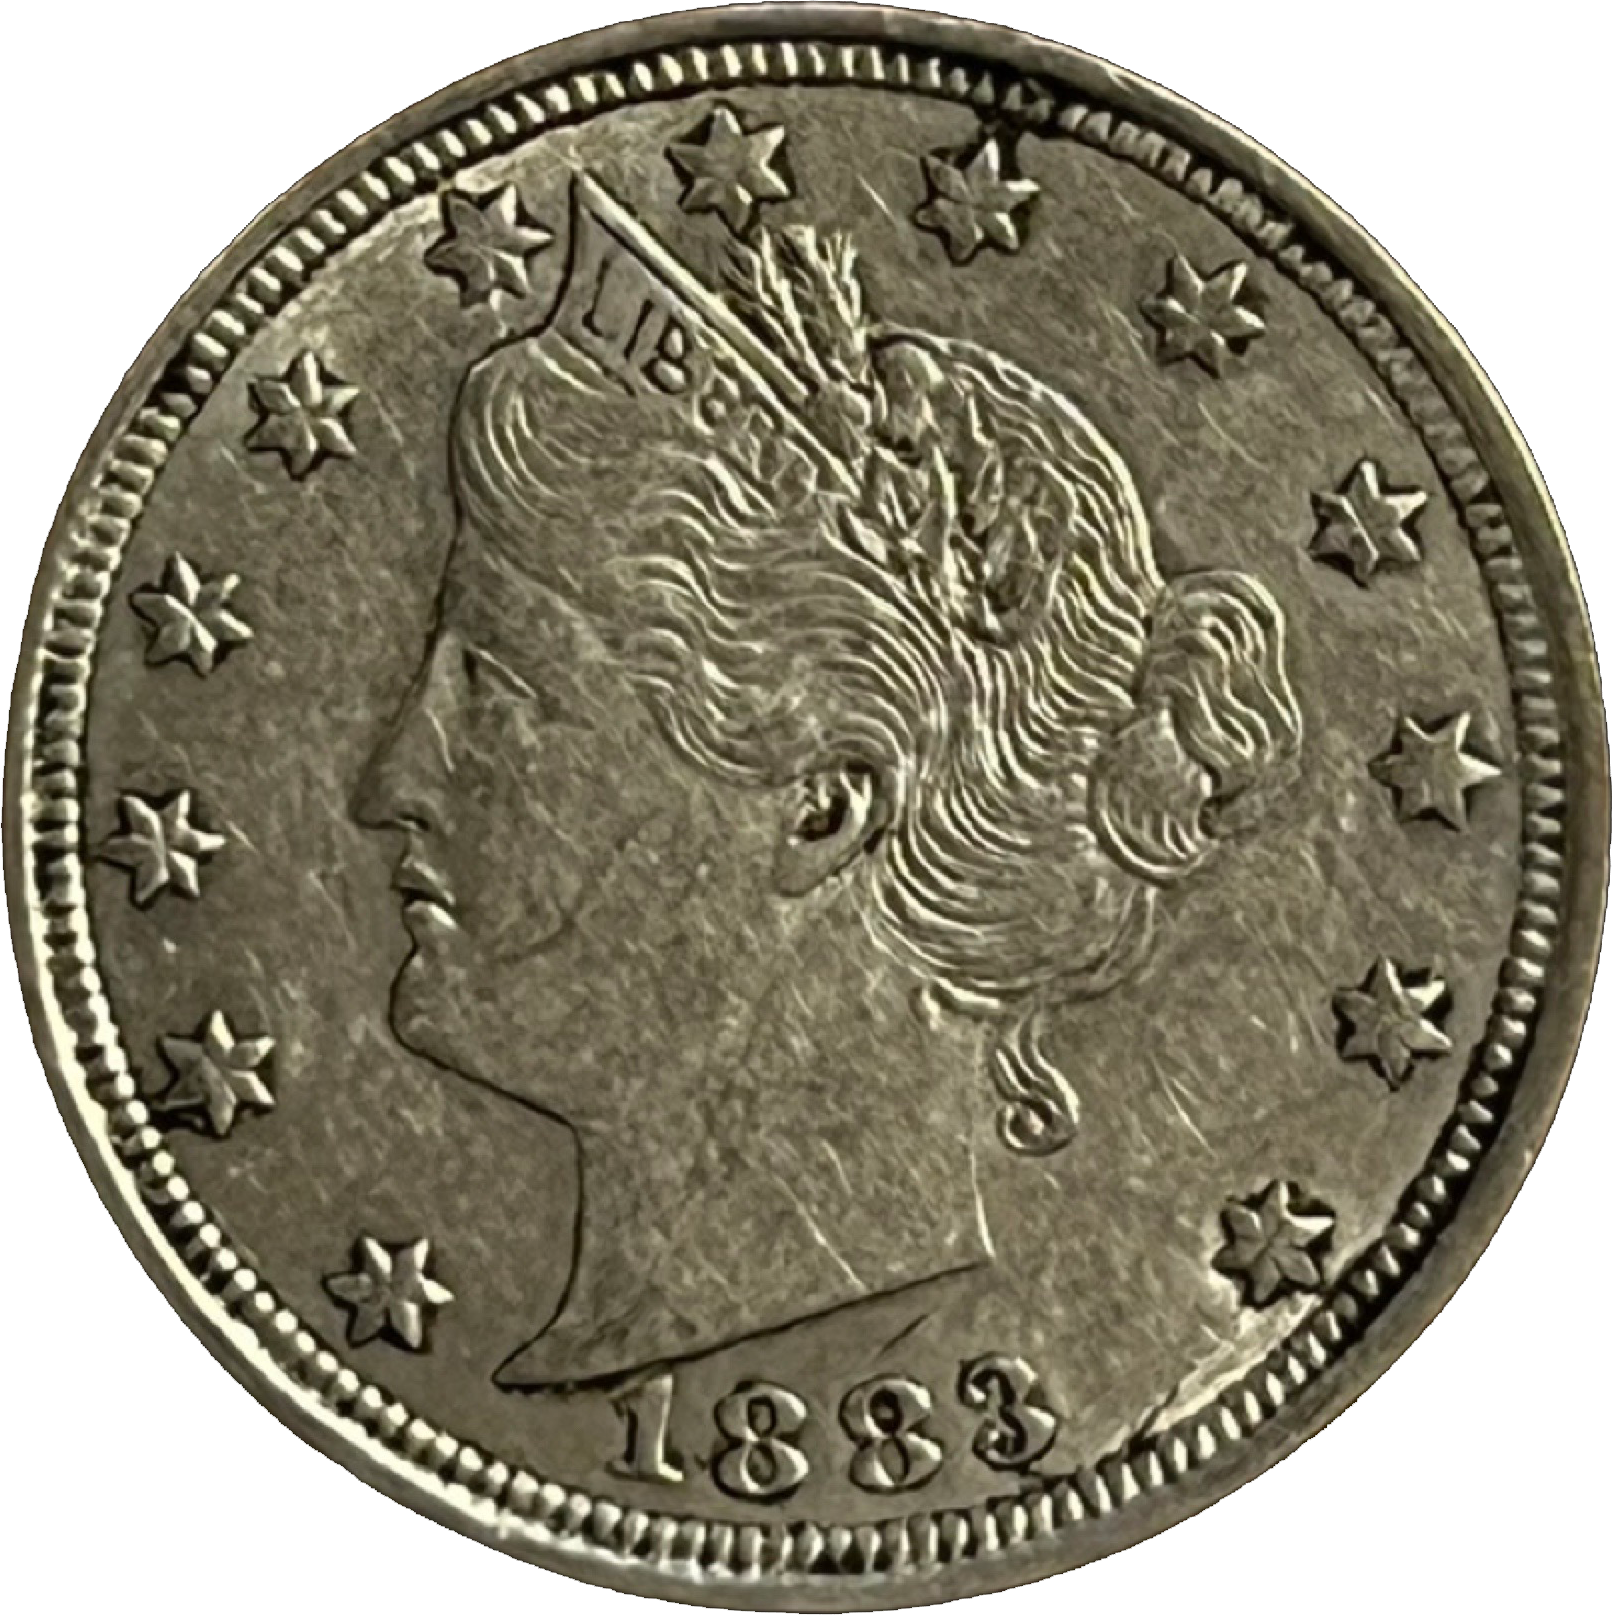  Liberty Nickel 